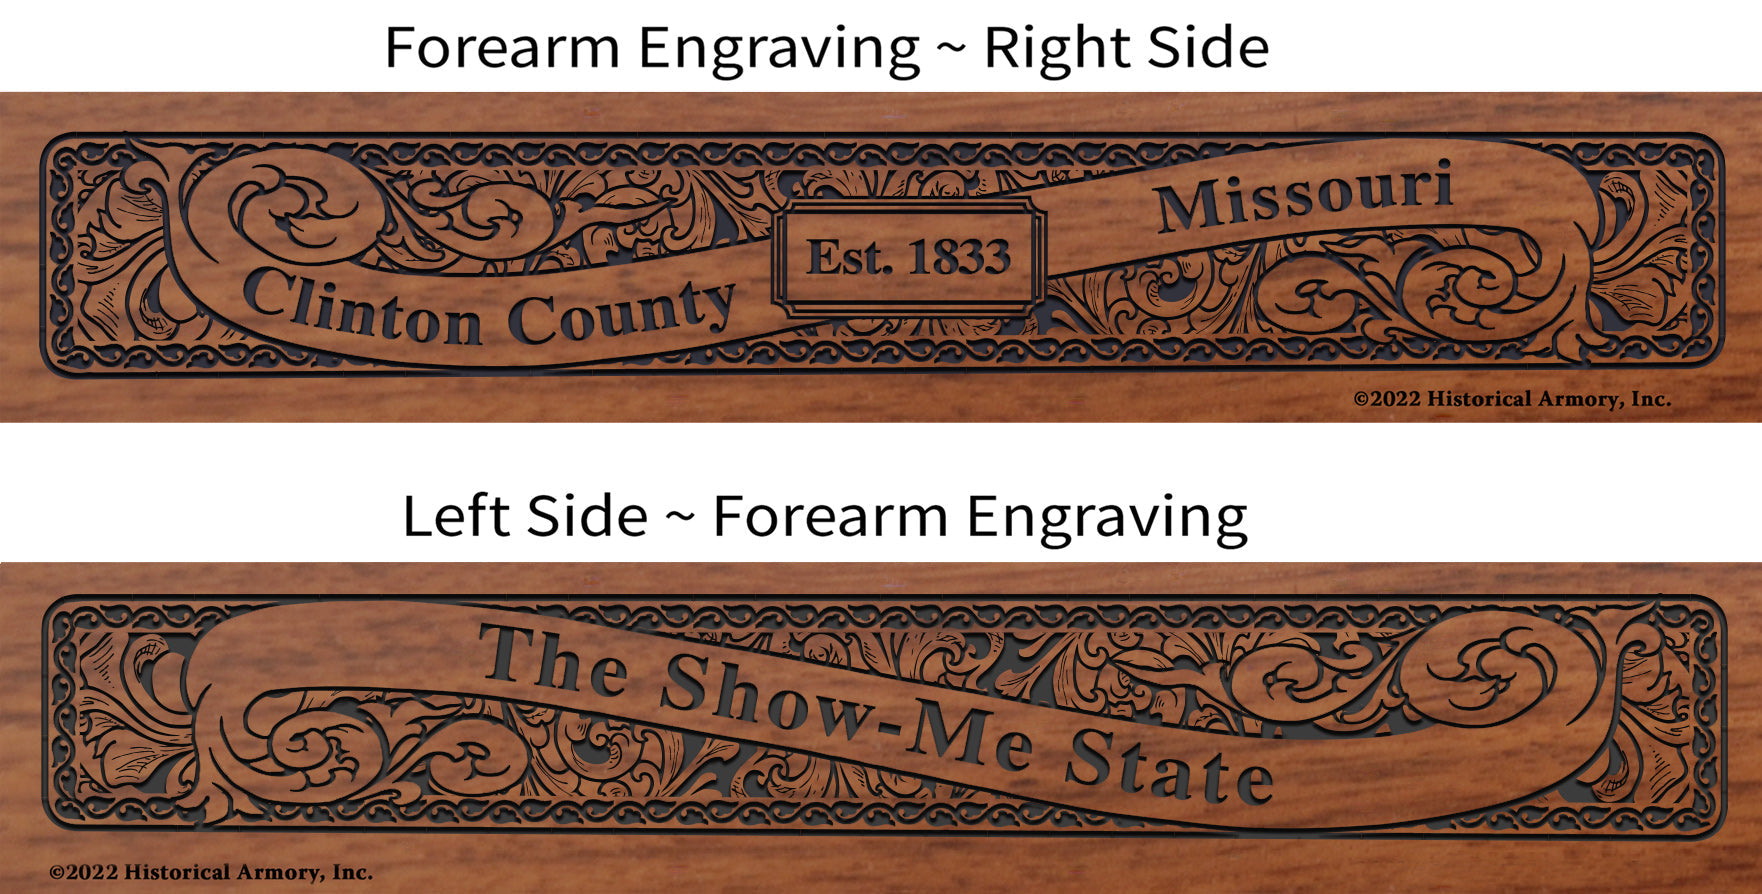 Clinton County Missouri Engraved Rifle Forearm